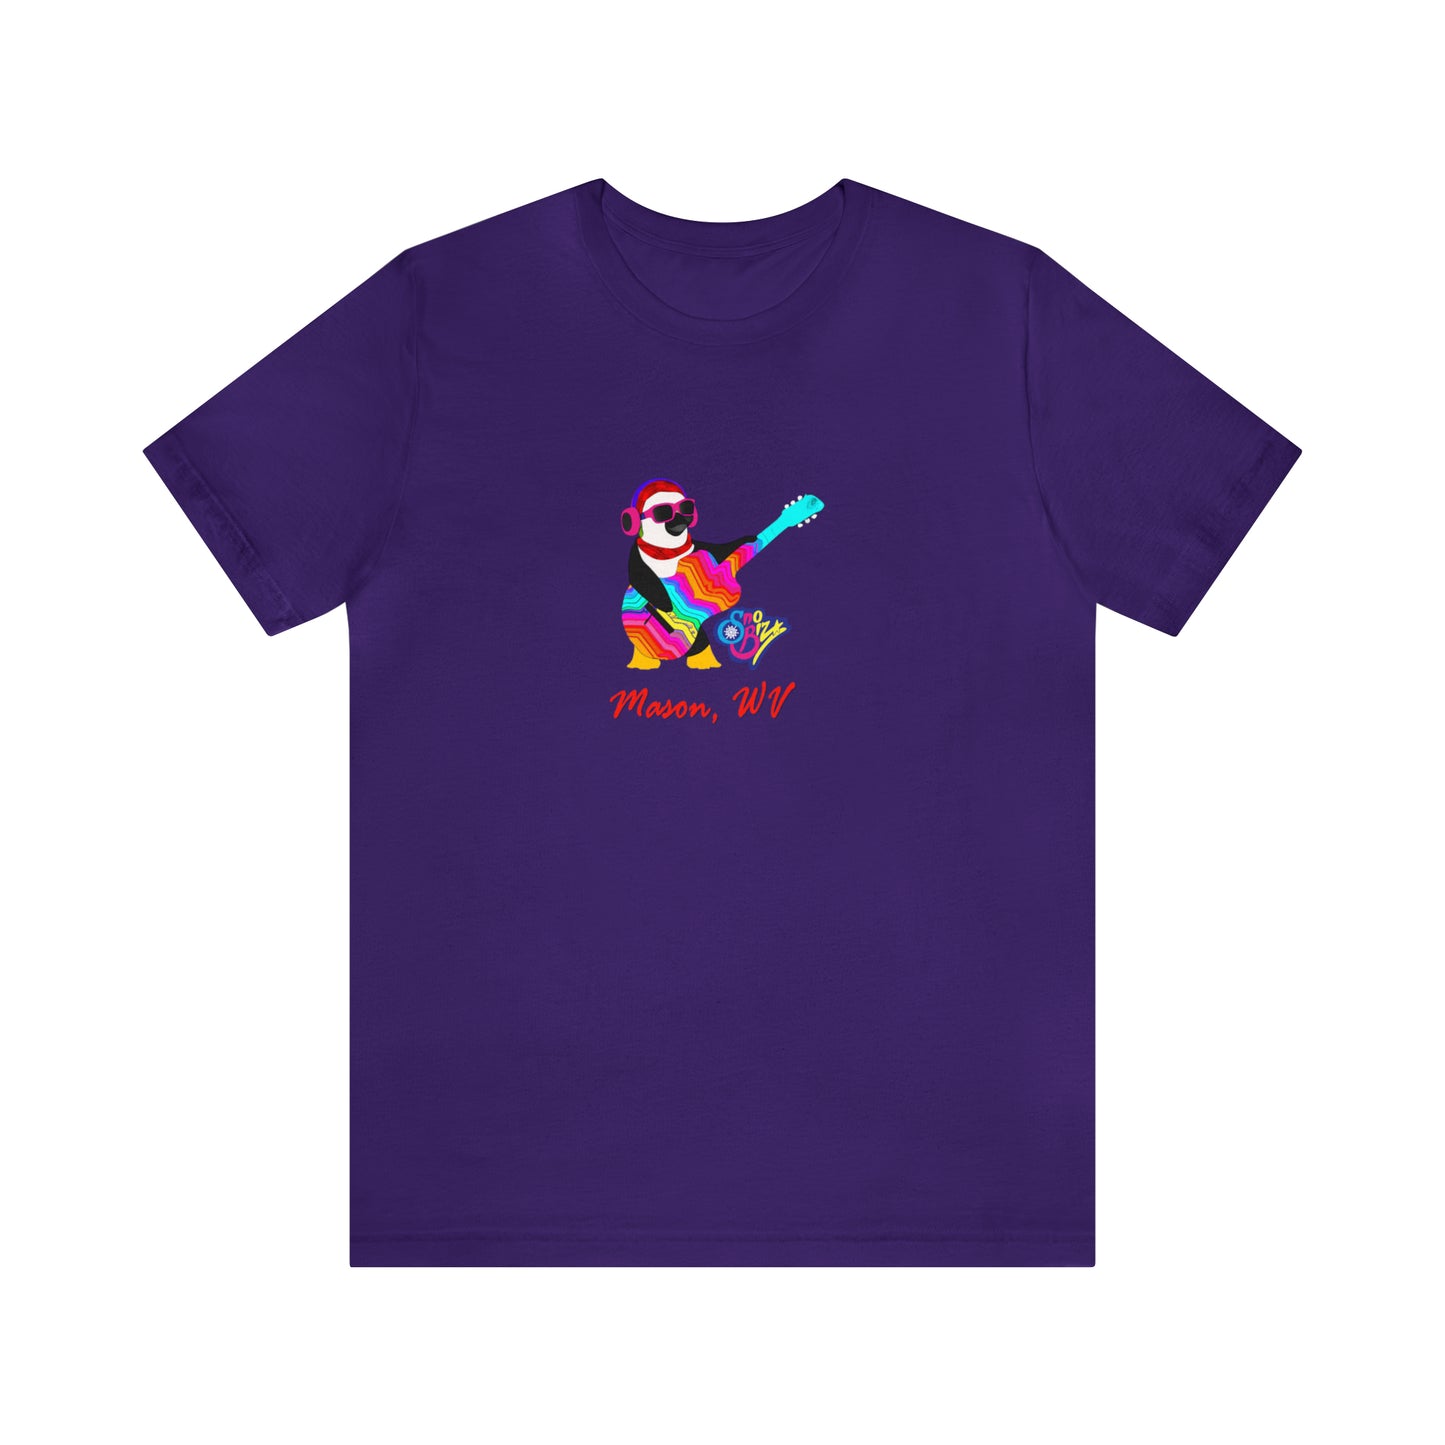 psychedelicBRANDz's Sno Biz Mason: Psychedelic Snow Swirl Tee design on a purple shirt